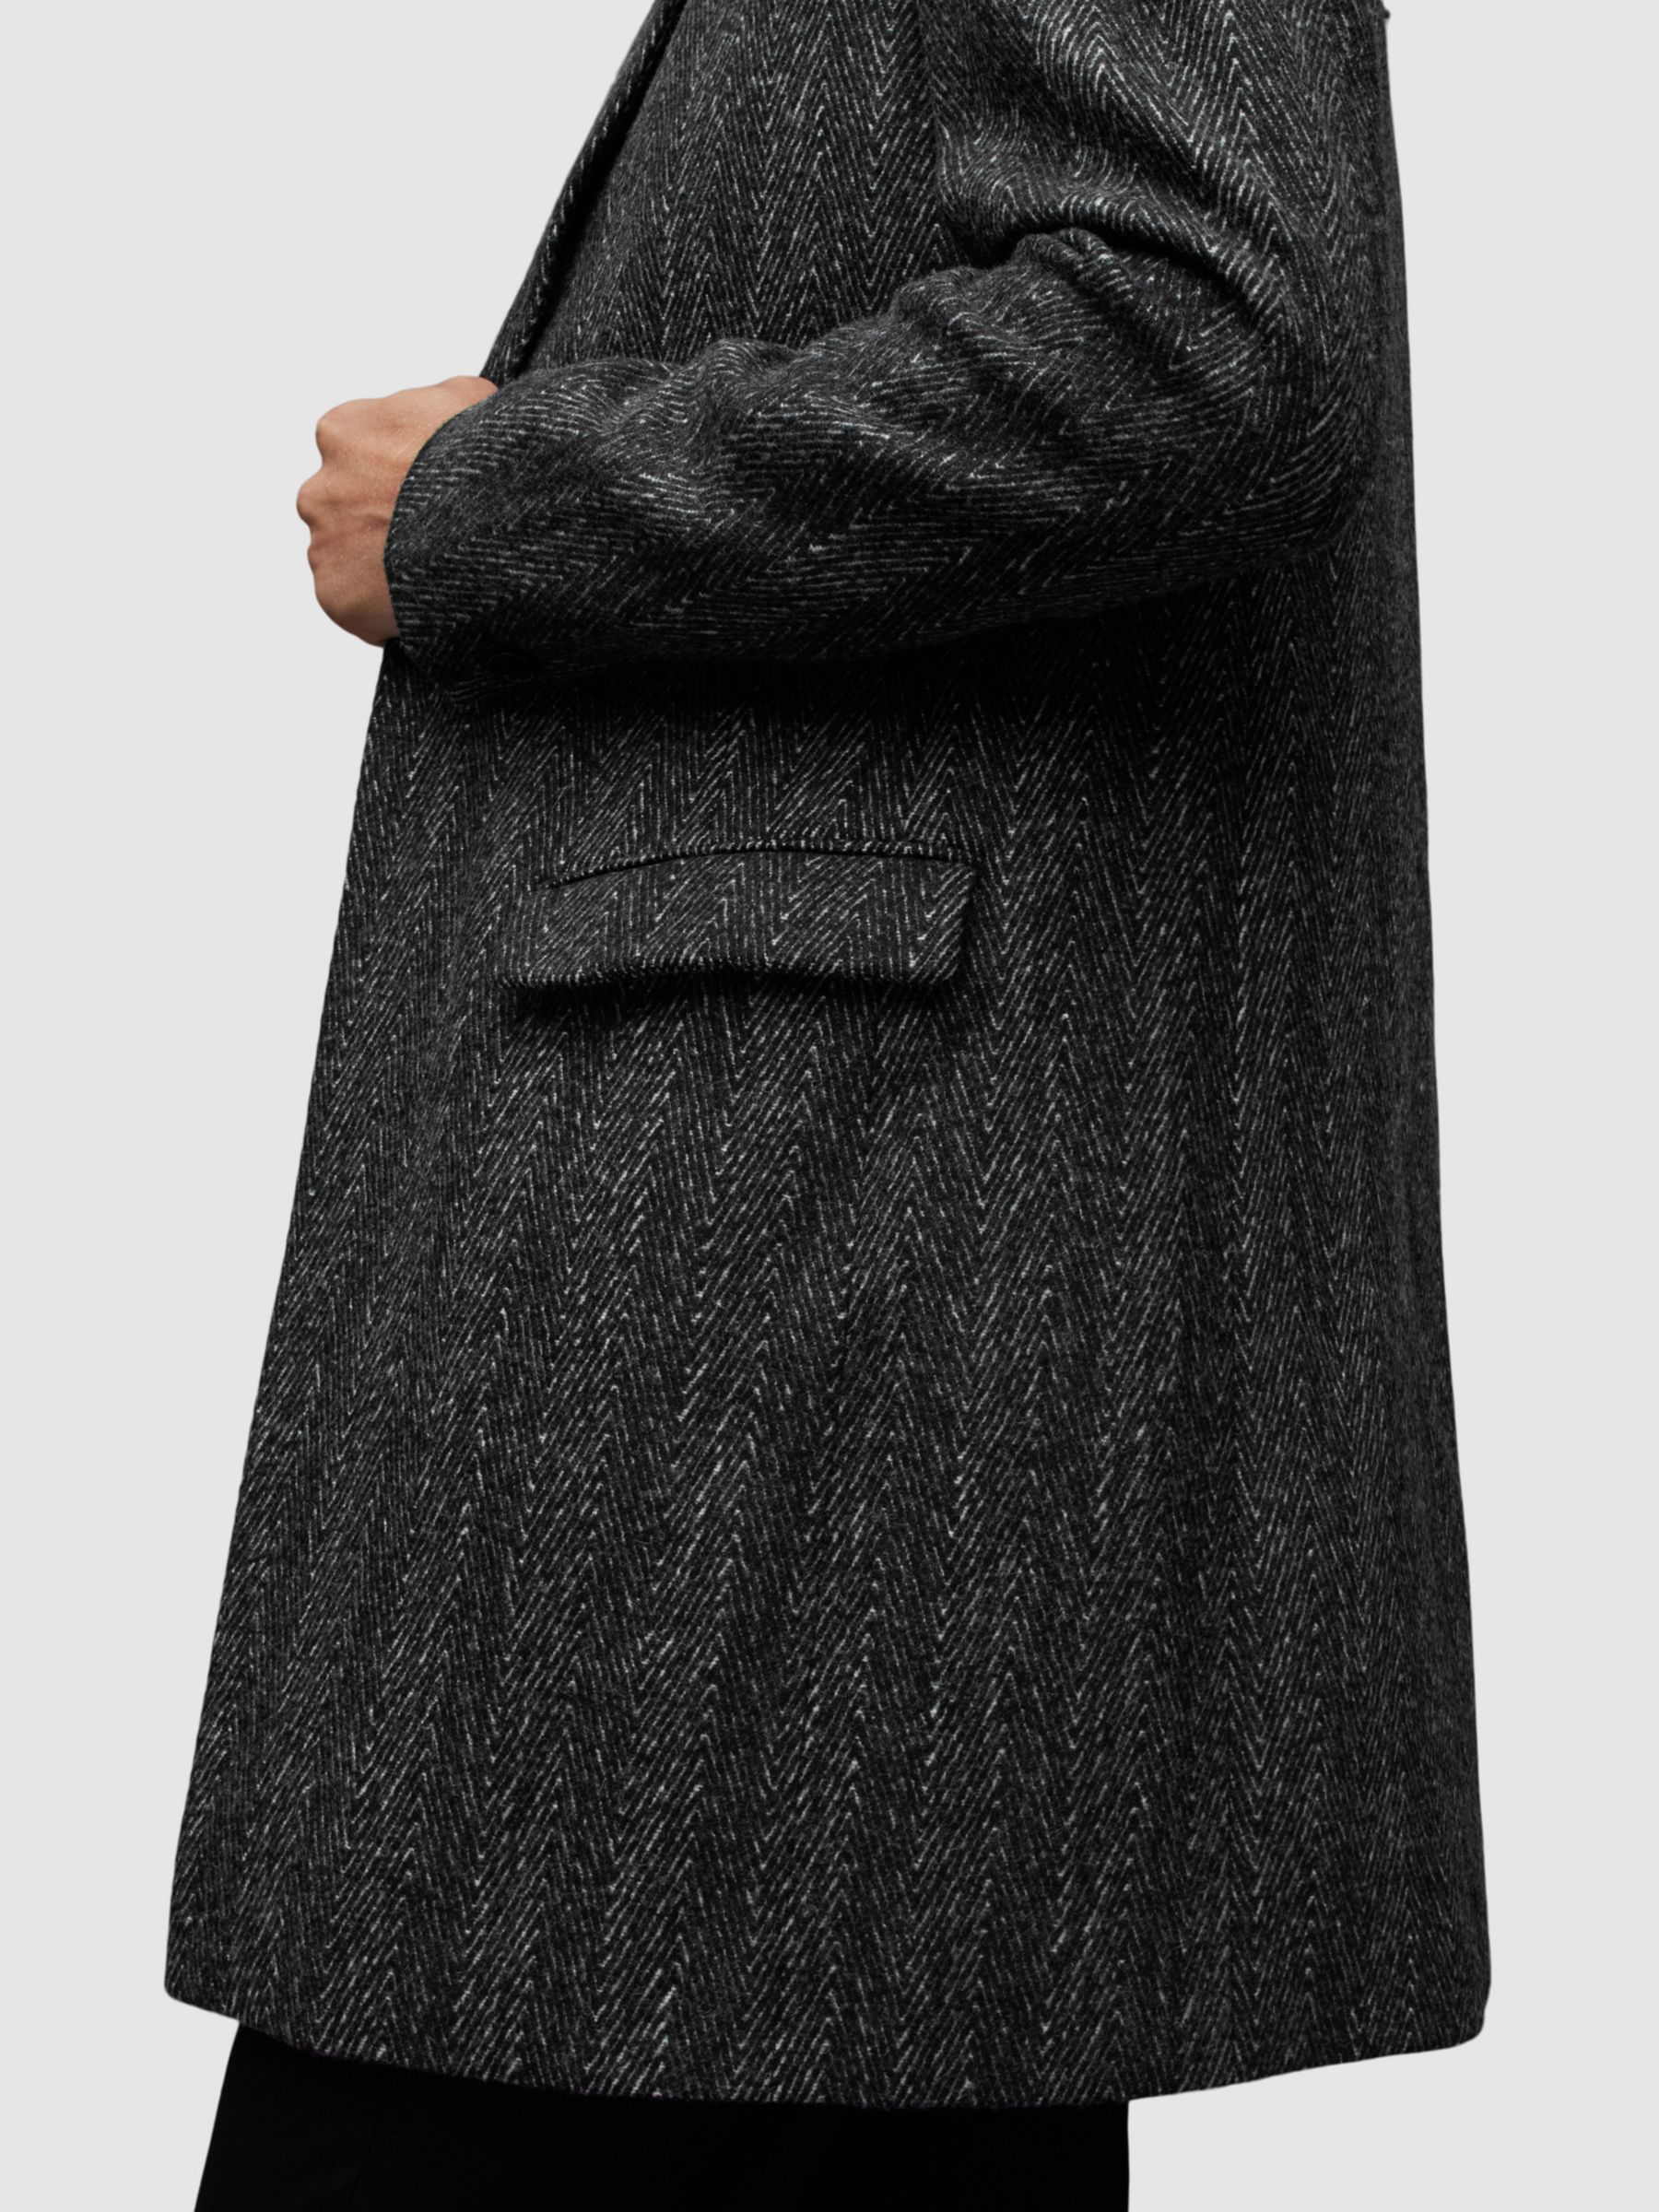 AllSaints Manor Herringbone Wool Coat, Black, 38R